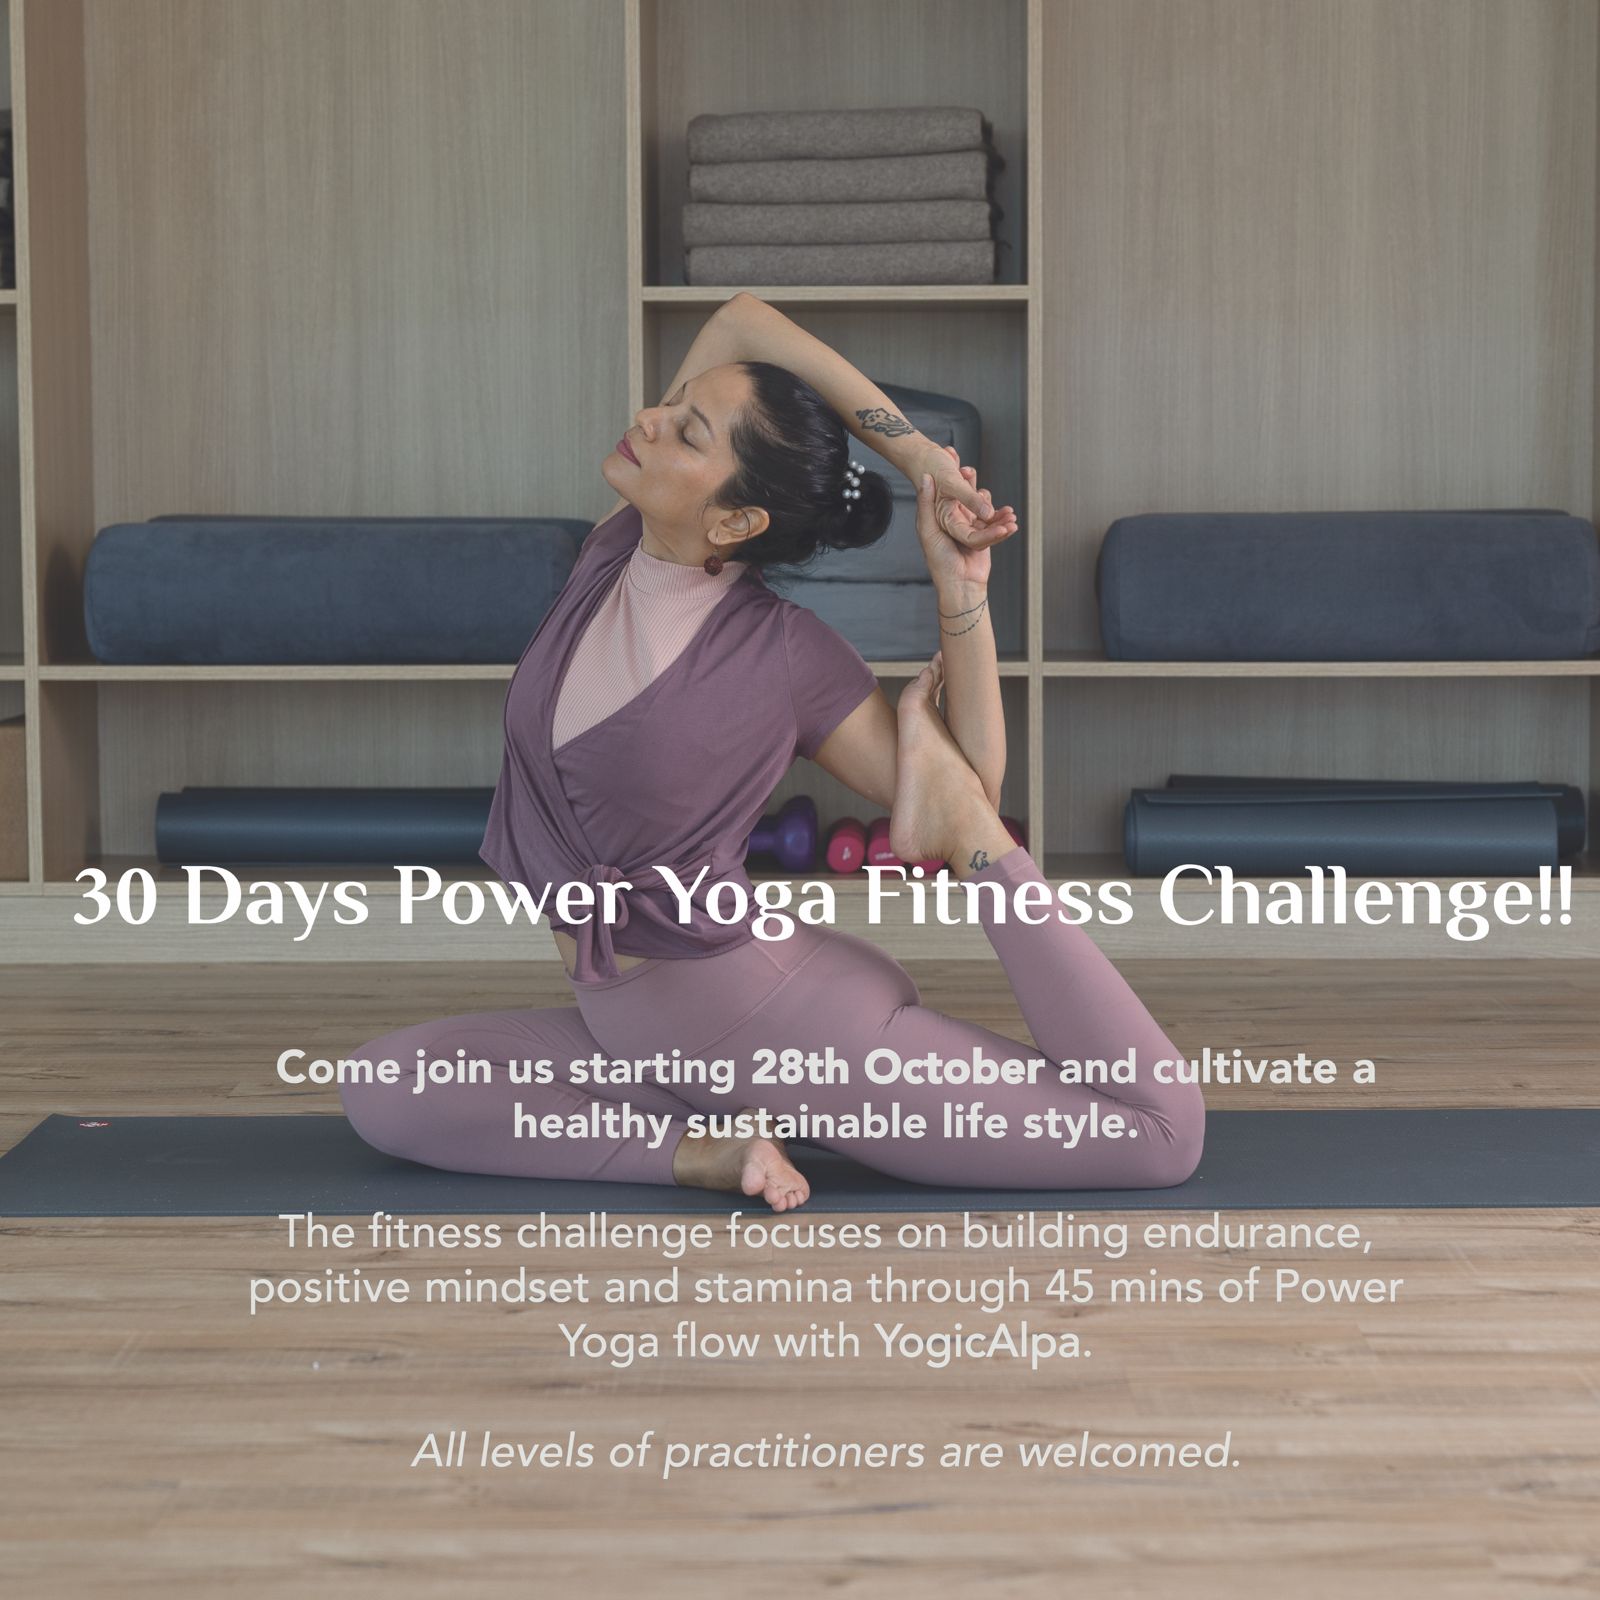 Power Yoga Fitness Challenge